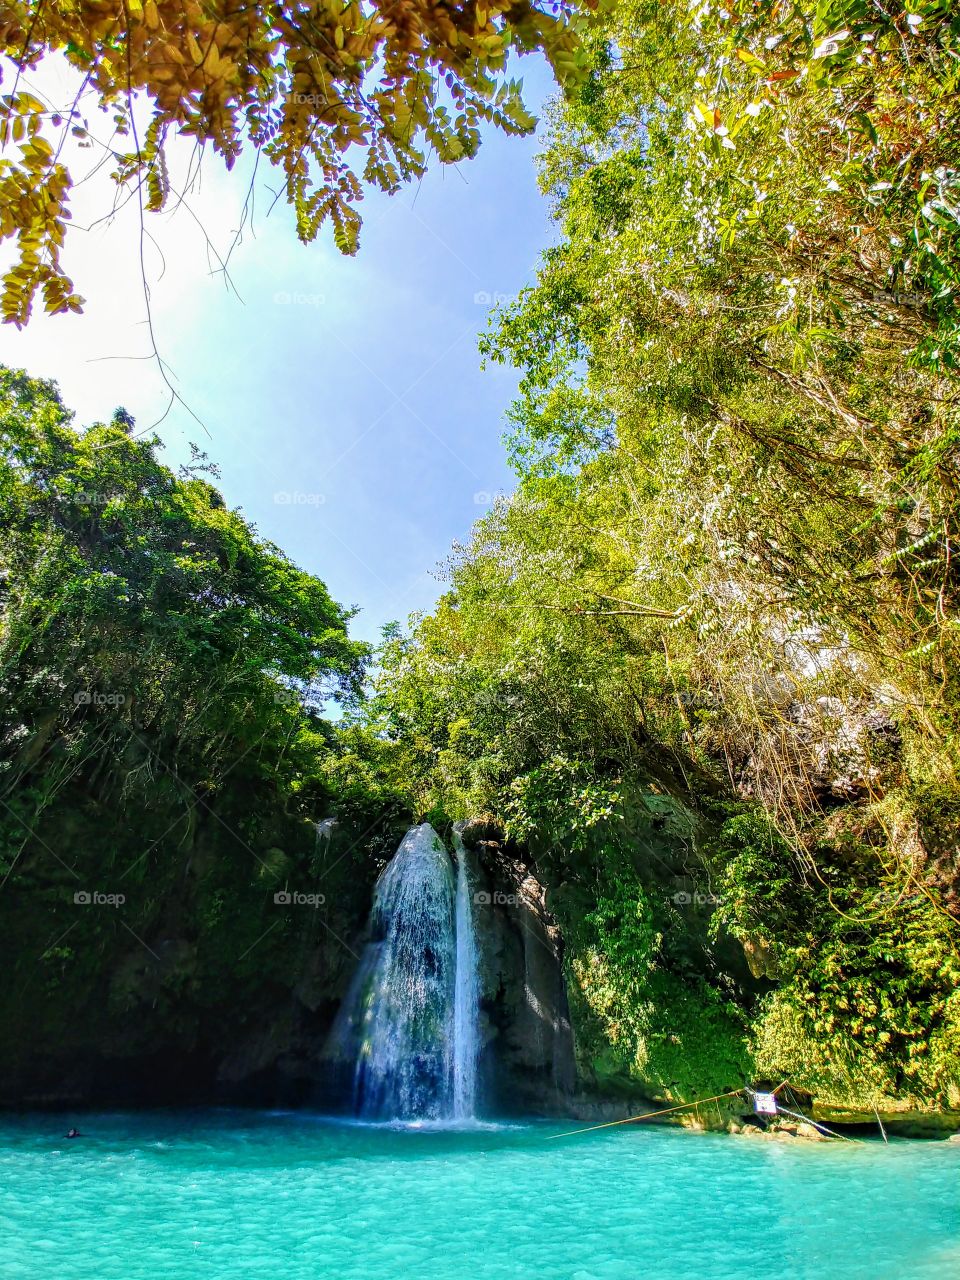 Kawasan Falls in the Philippines